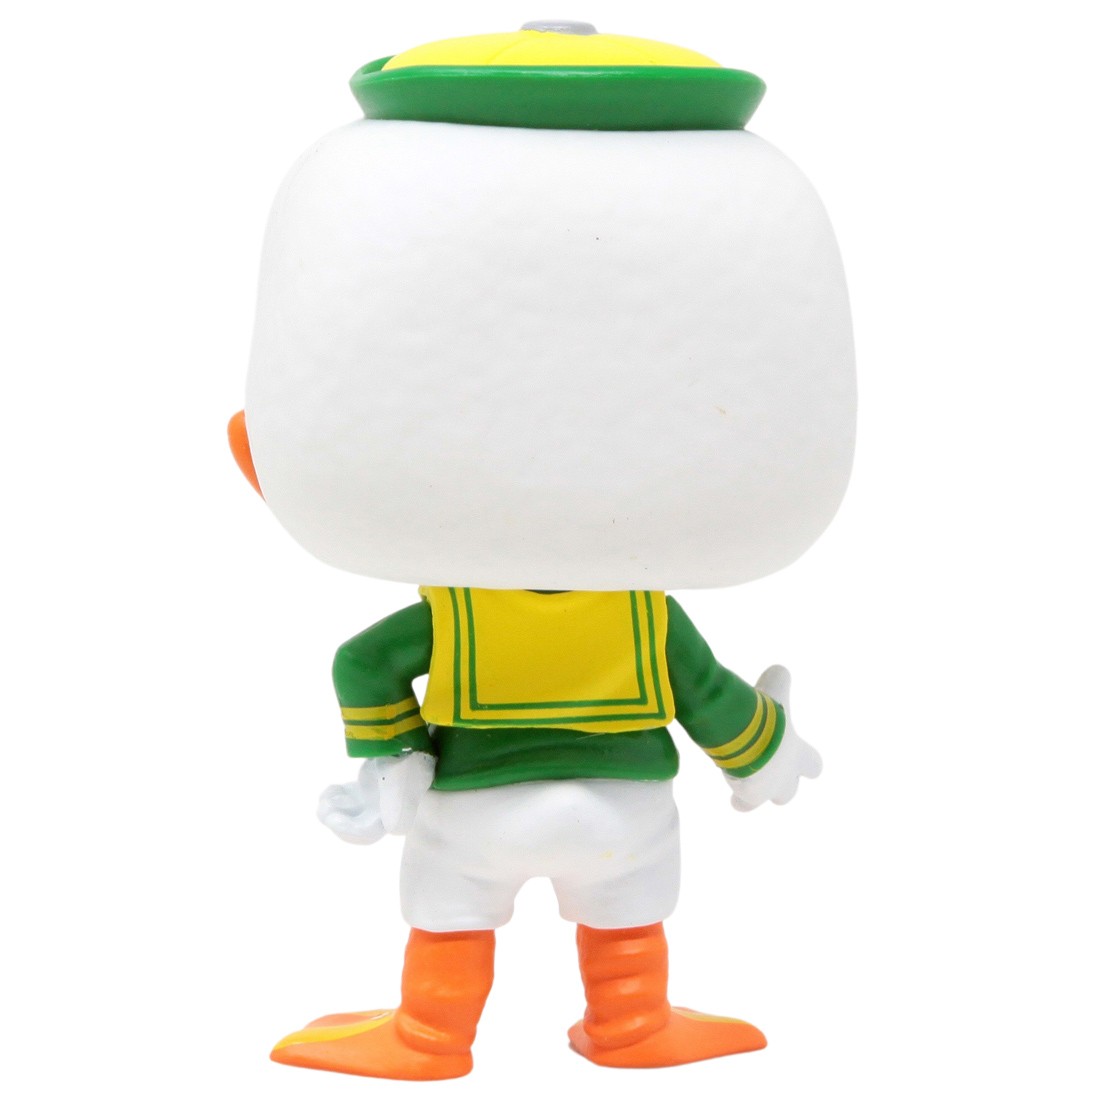 Dan Fouts Signed Oregon Ducks NCAA Mascot Funko Pop Doll #14